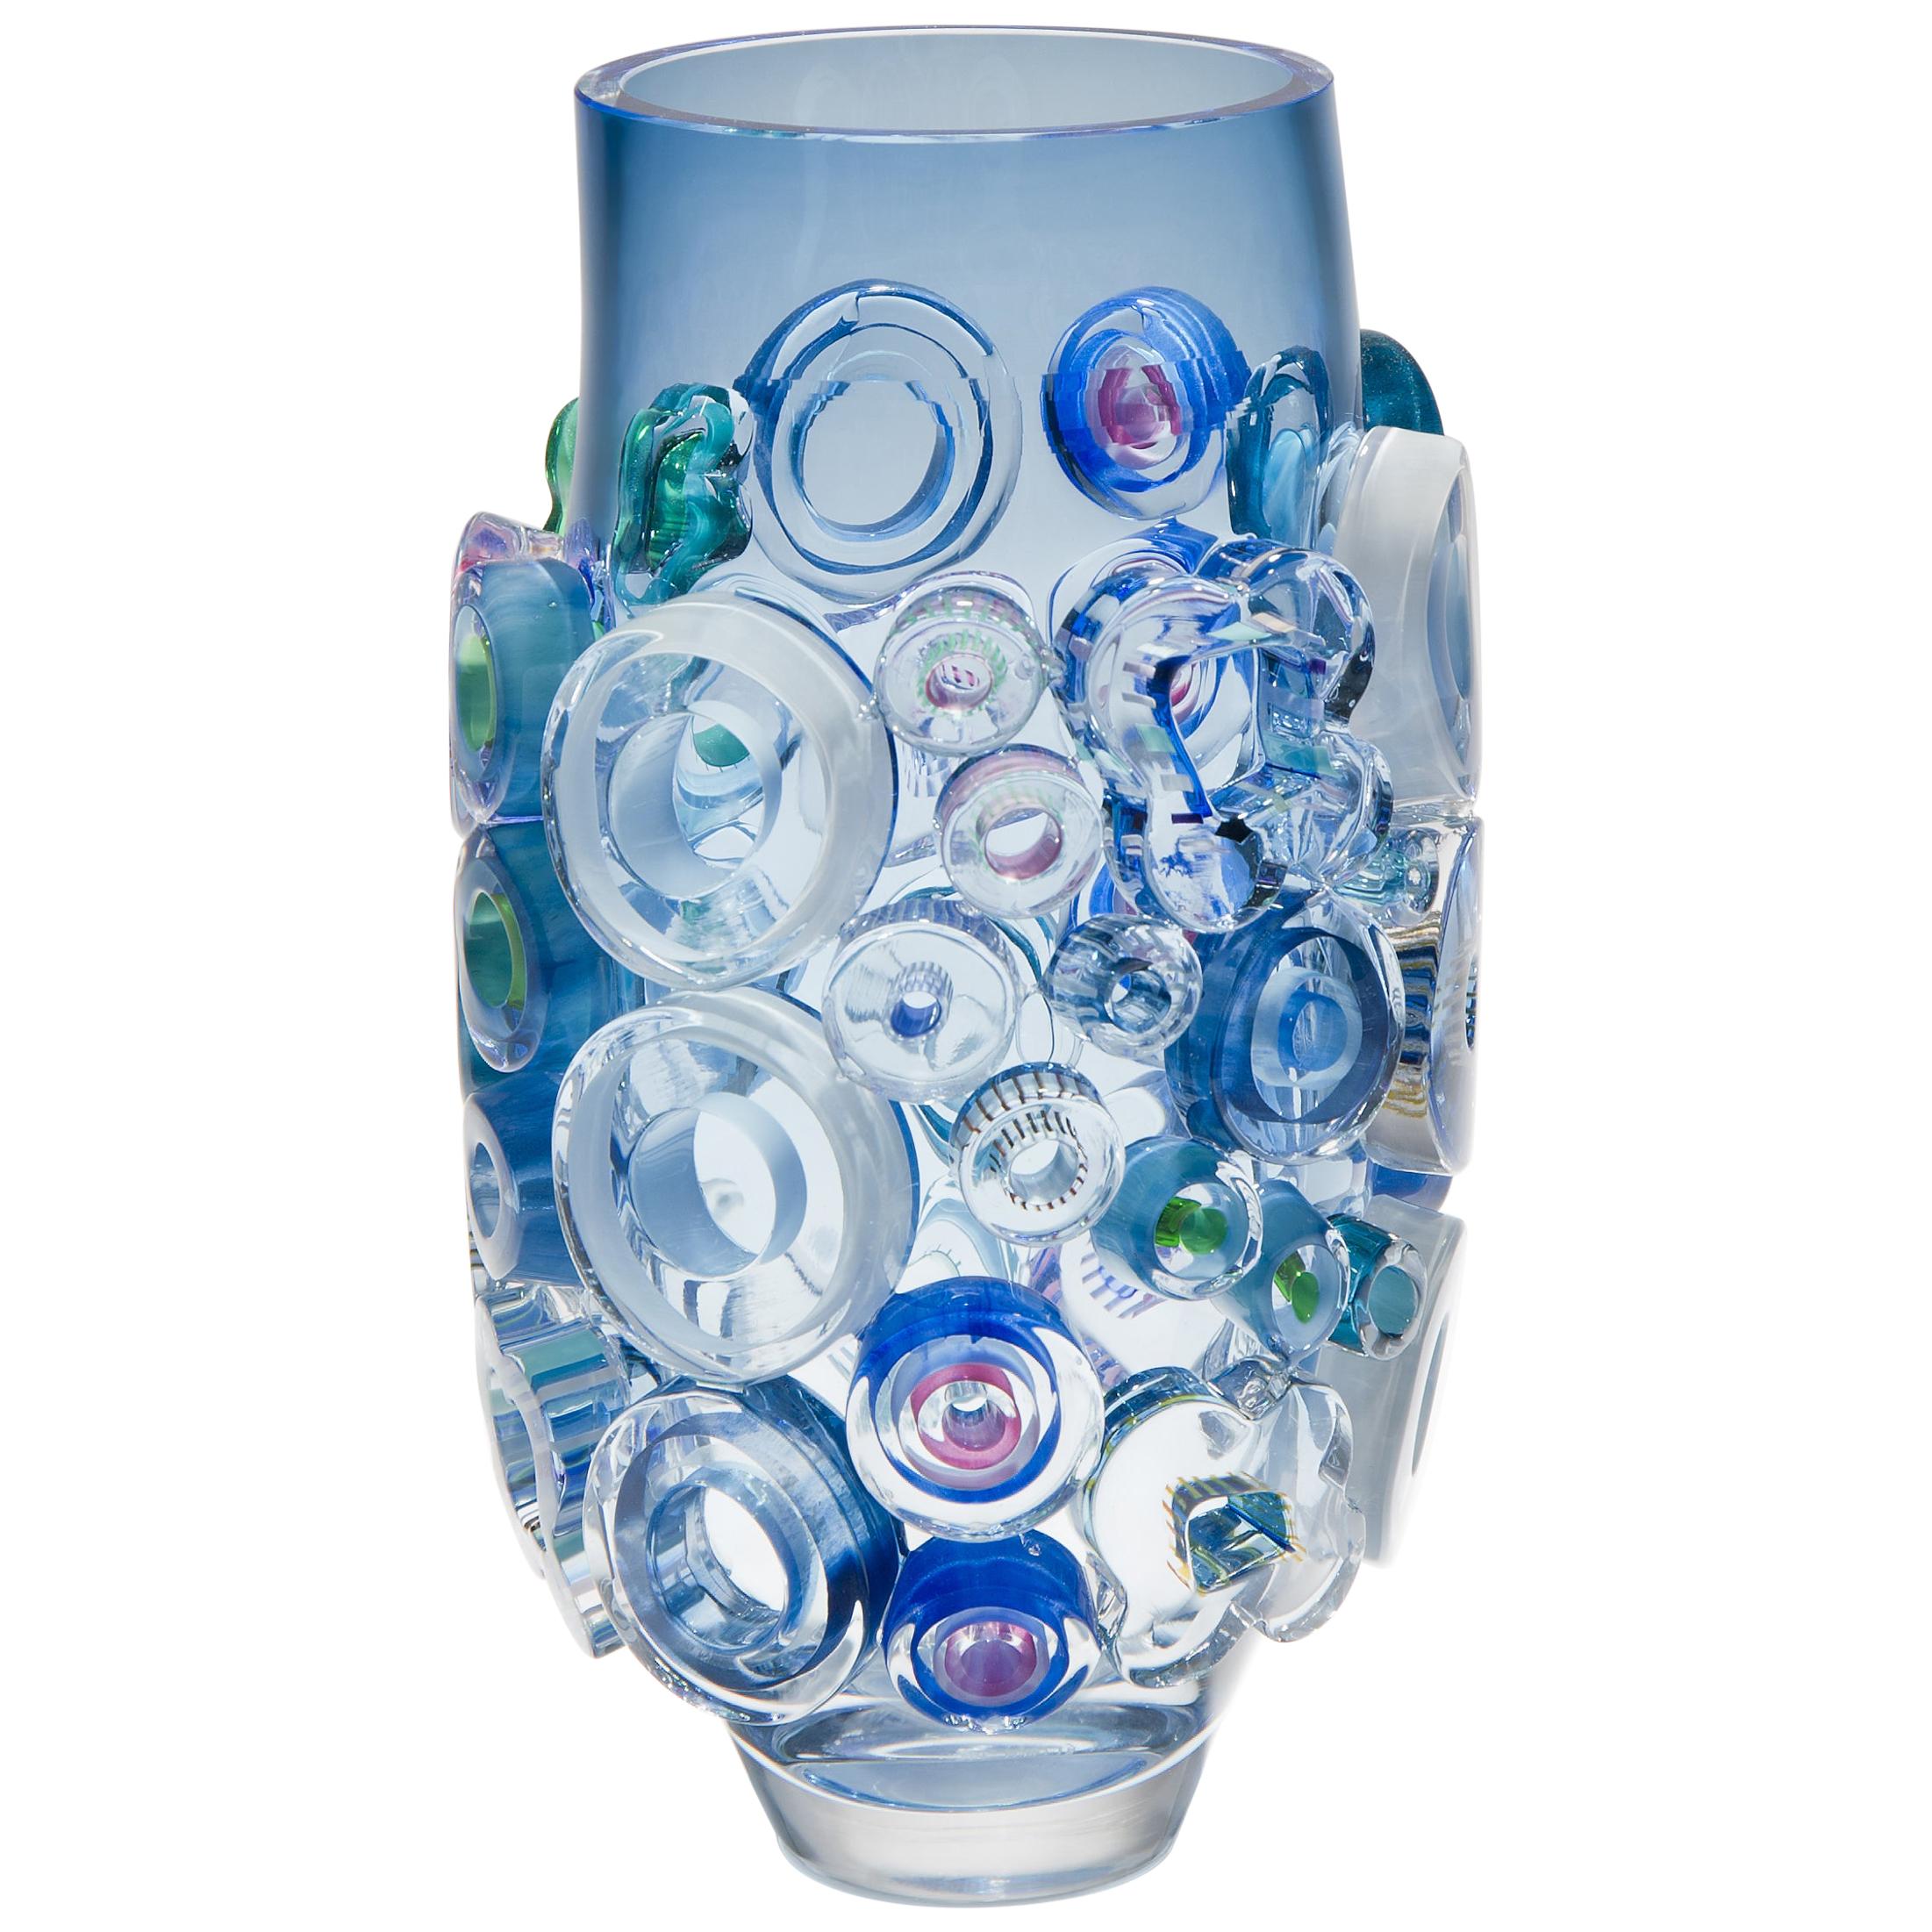 Bright Field Aquamarine with Circles, a Unique Blue Glass Vase by Sabine Lintzen